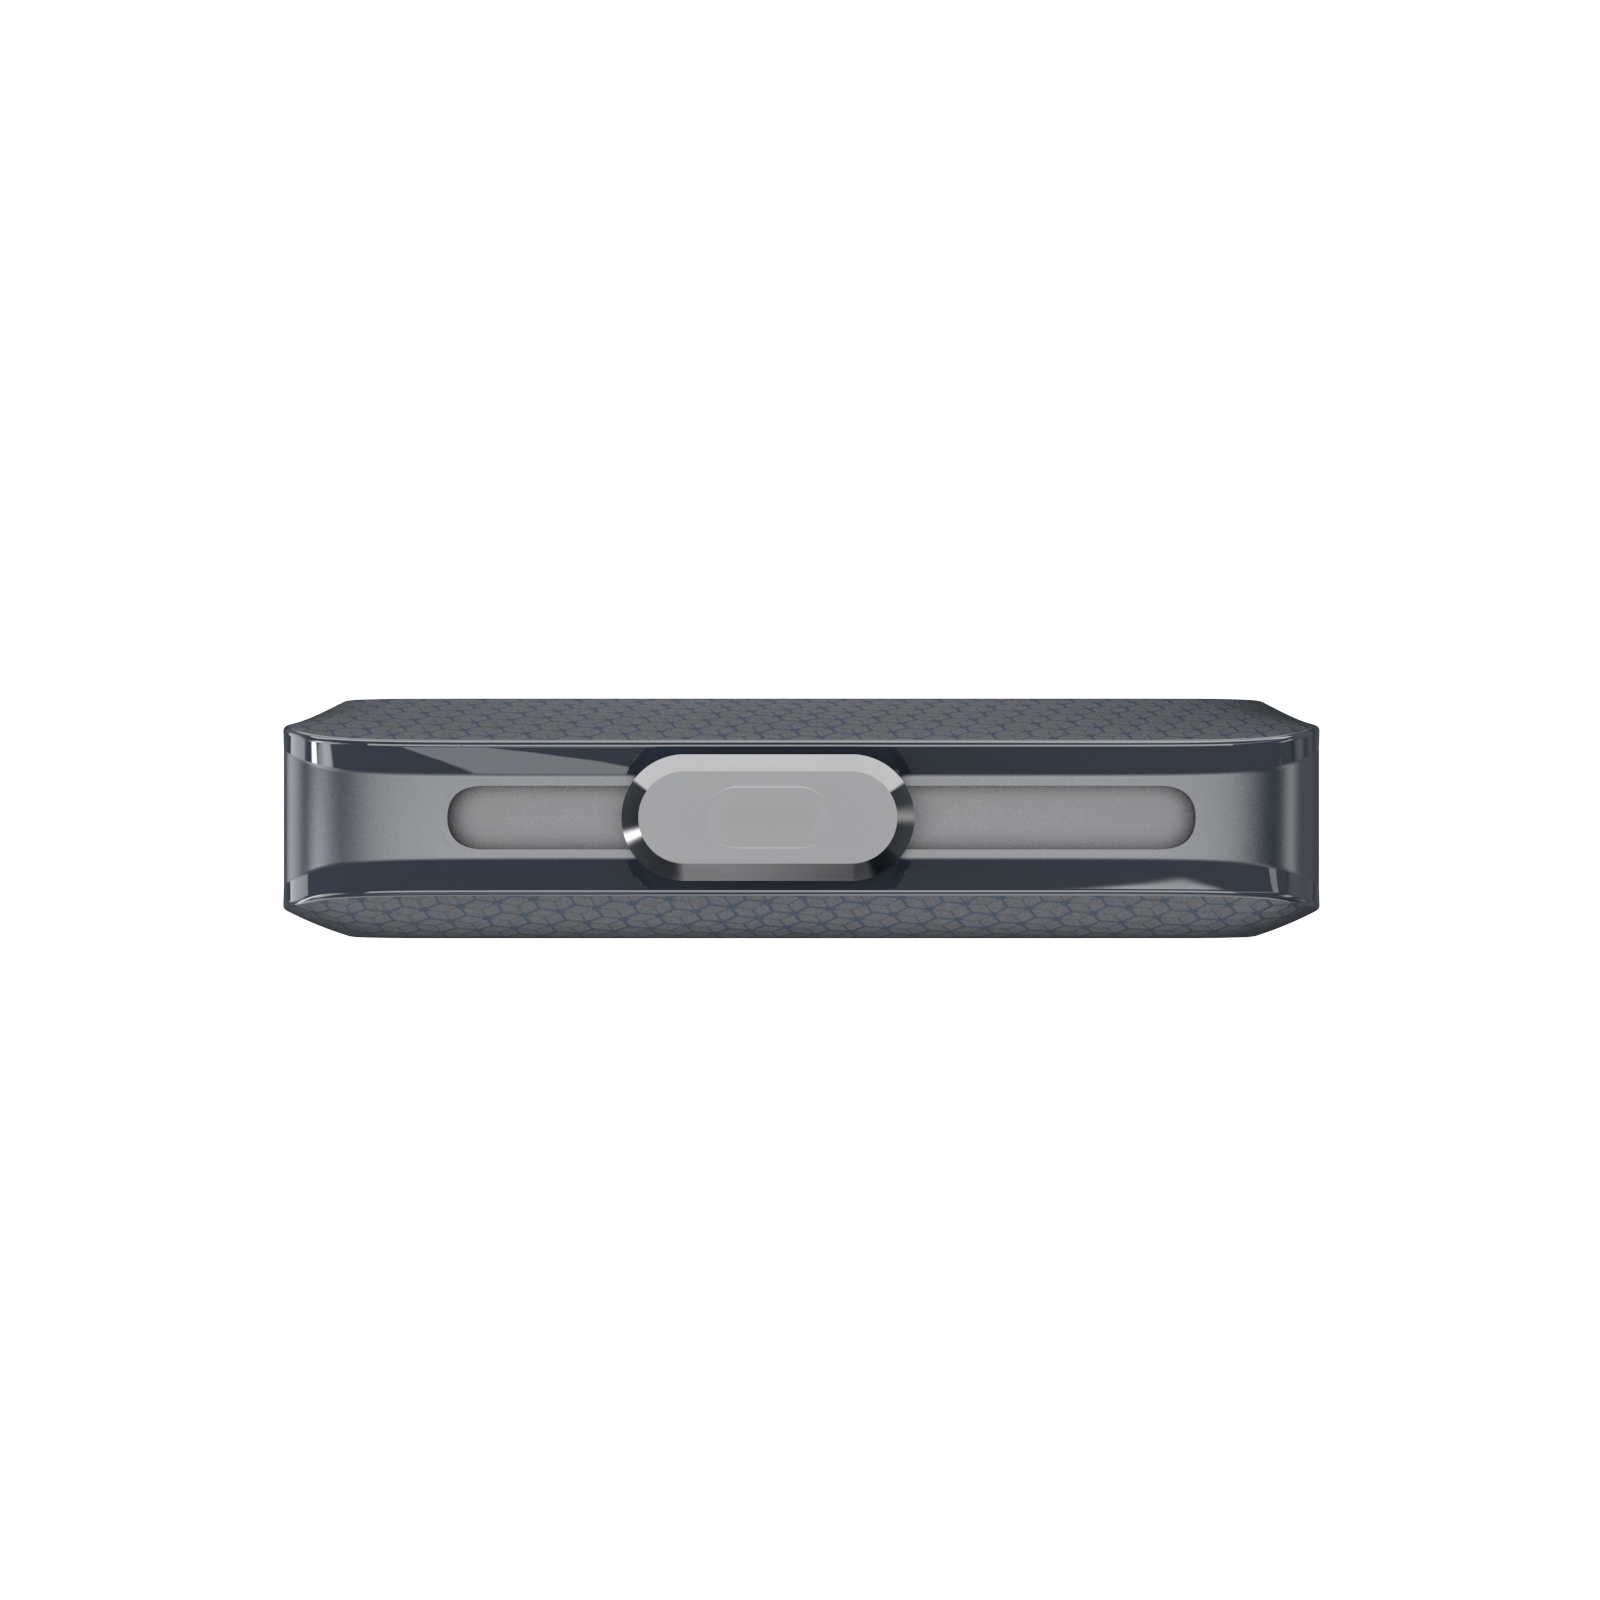 USB флеш накопитель SanDisk 128GB Ultra Dual USB 3.0/Type-C (SDDDC2-128G-G46) изображение 7